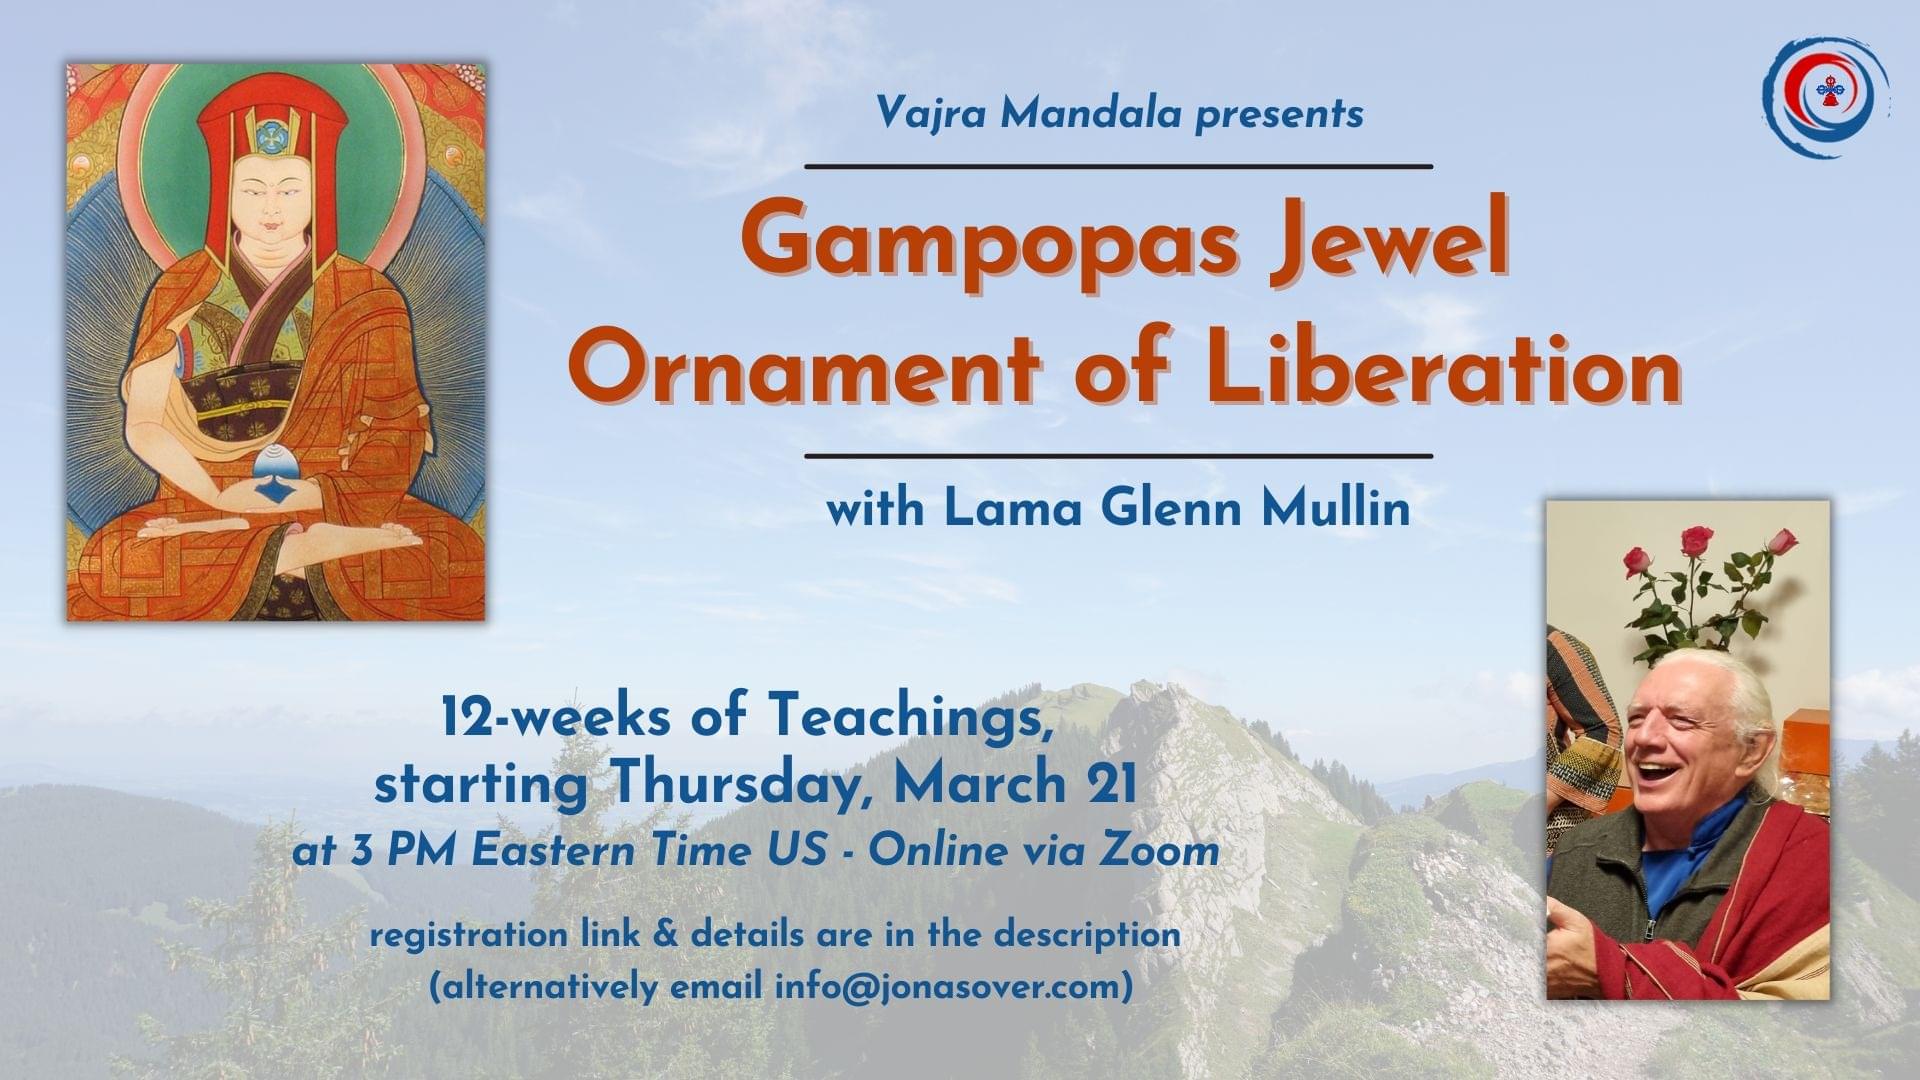 Gampopa's jewel ornament of liberation